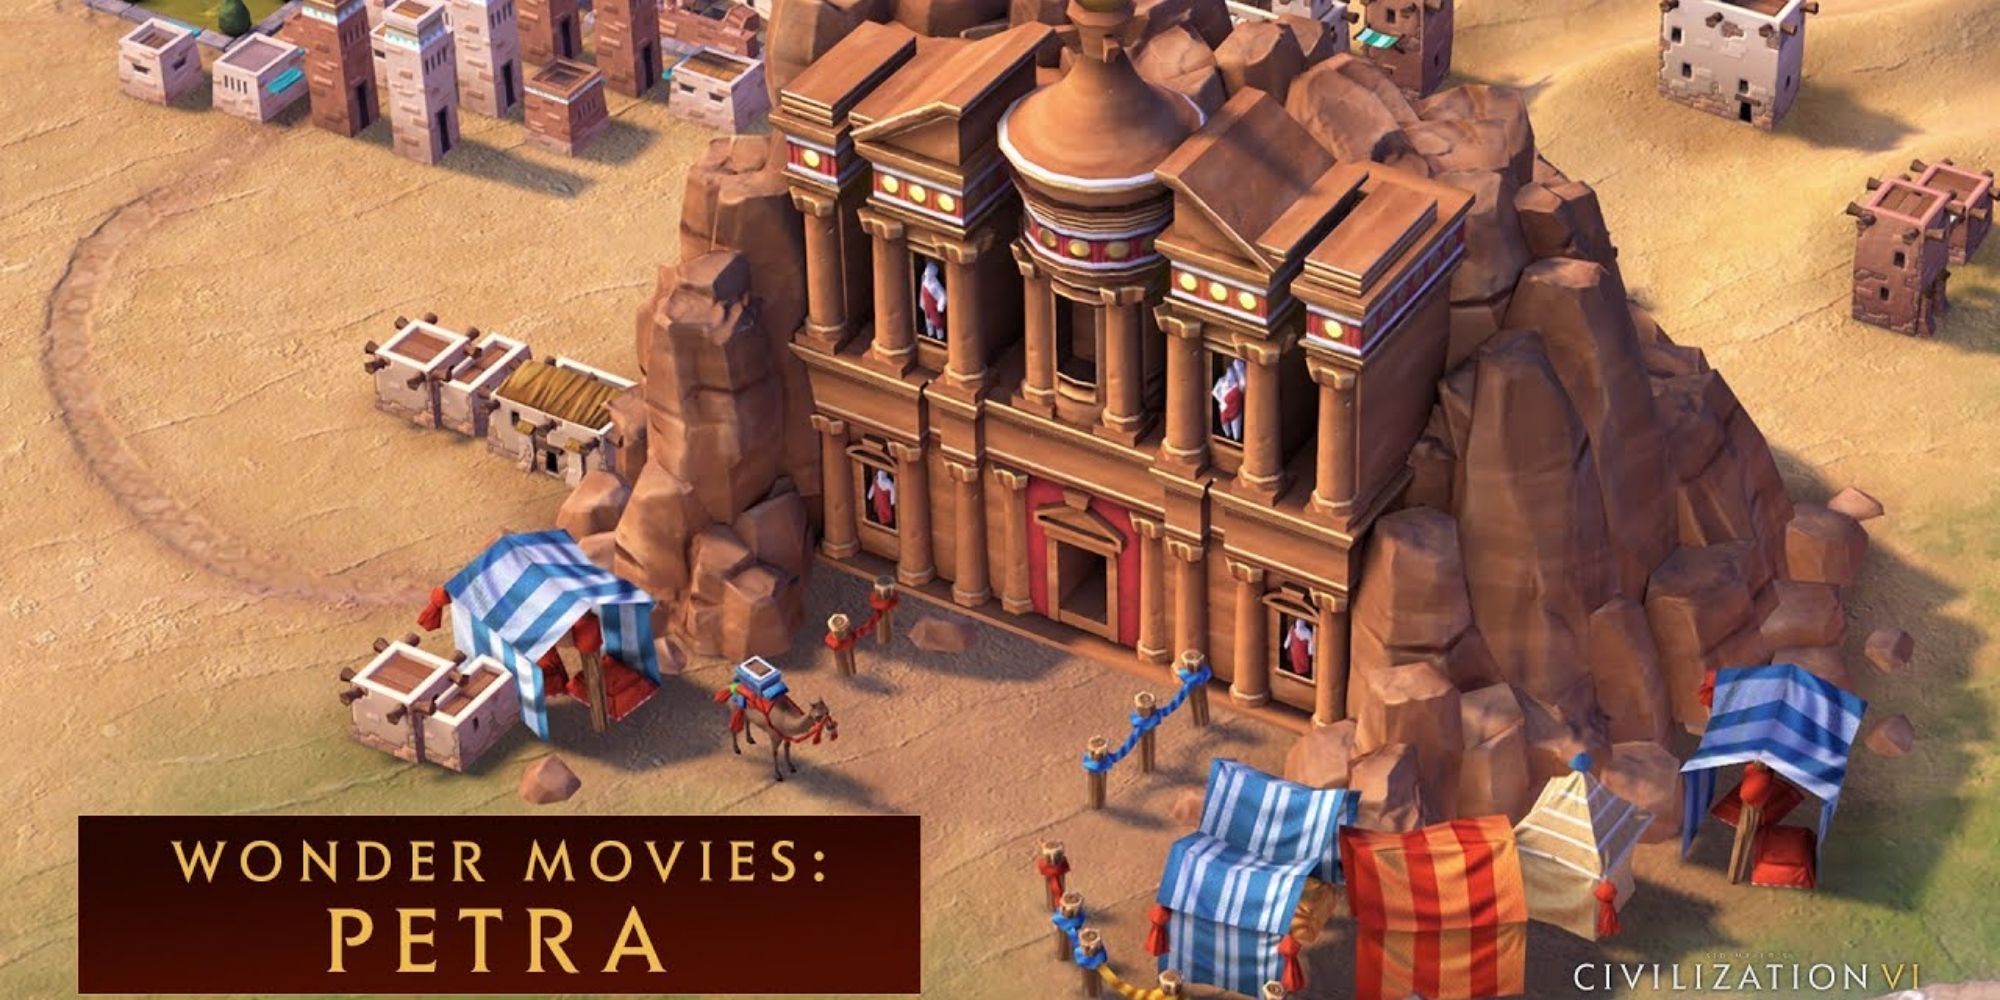 Petra as seen in Civilization 6